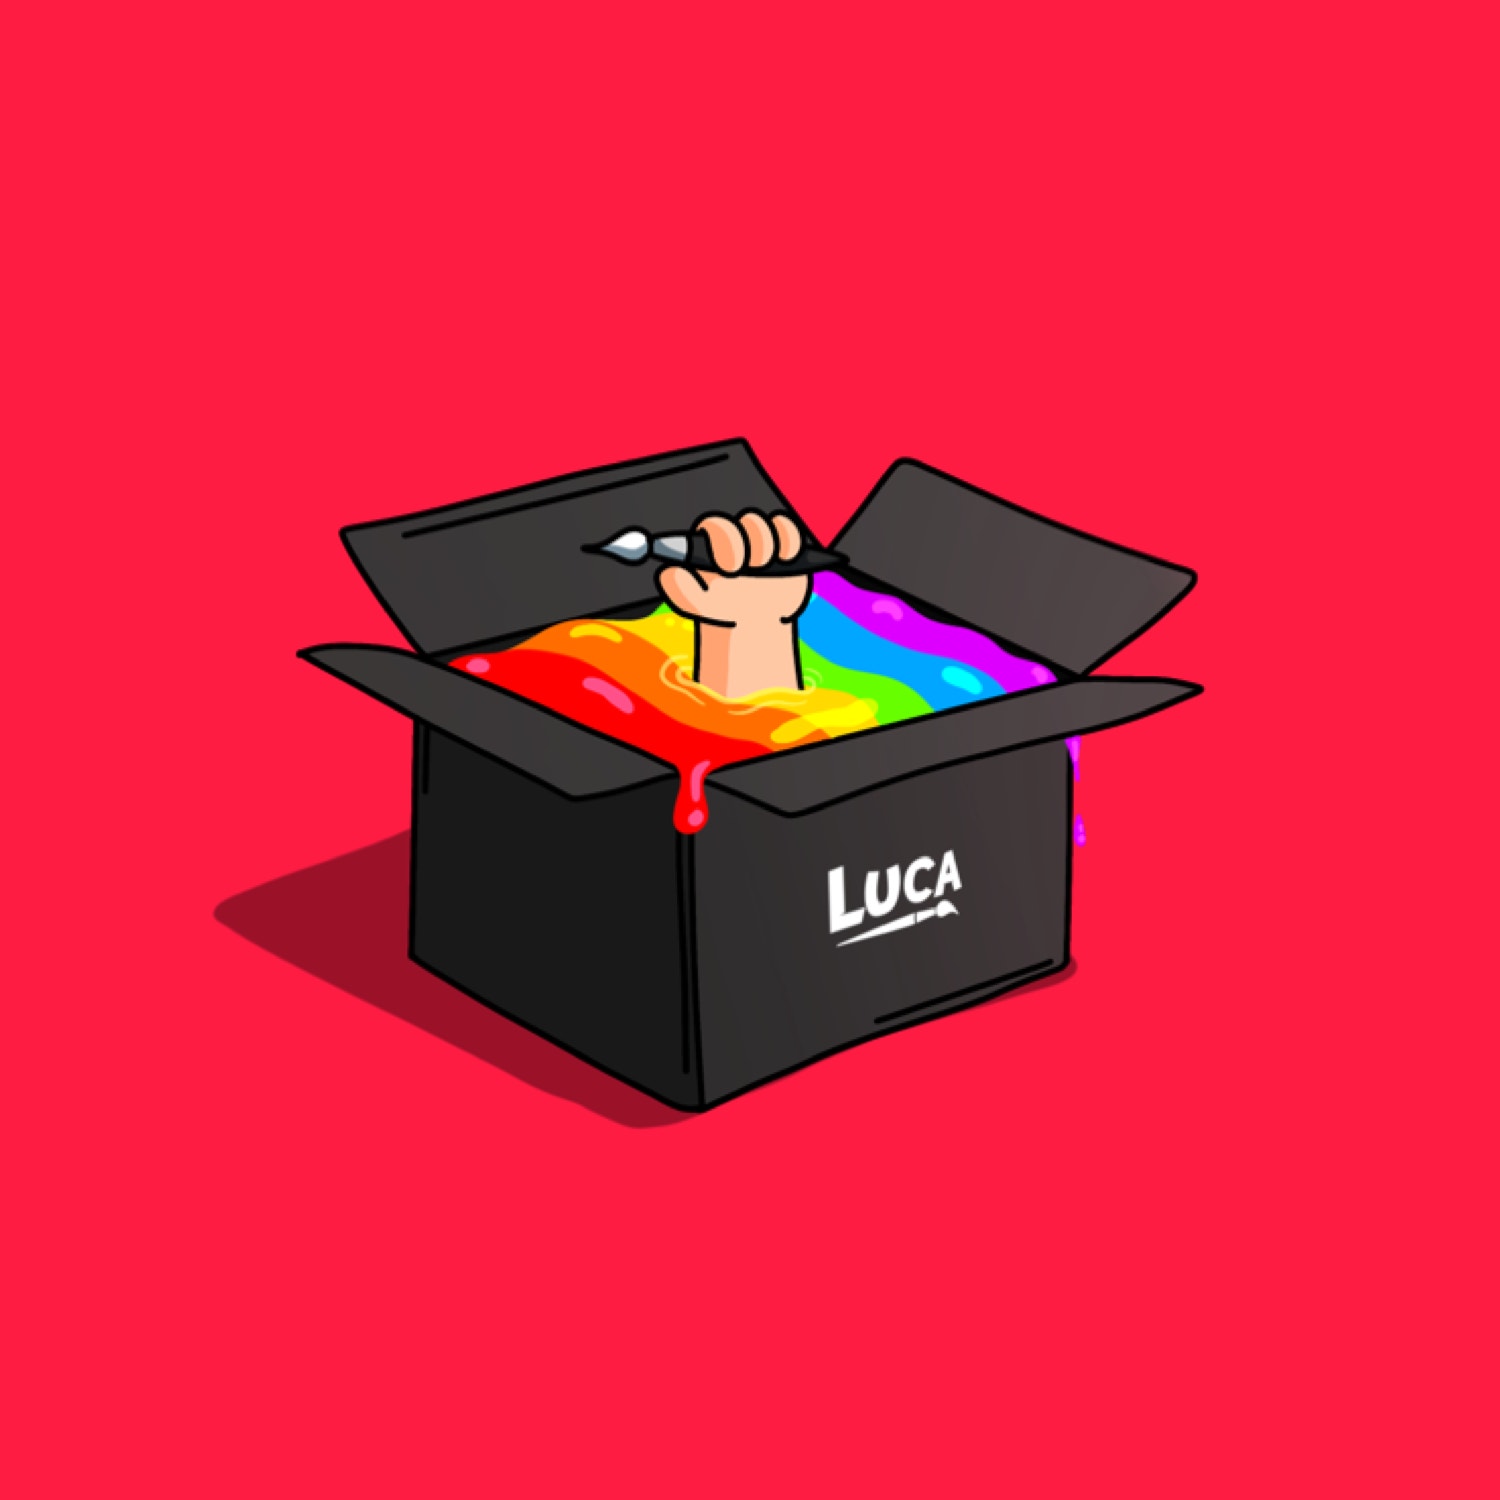 Luca's Box